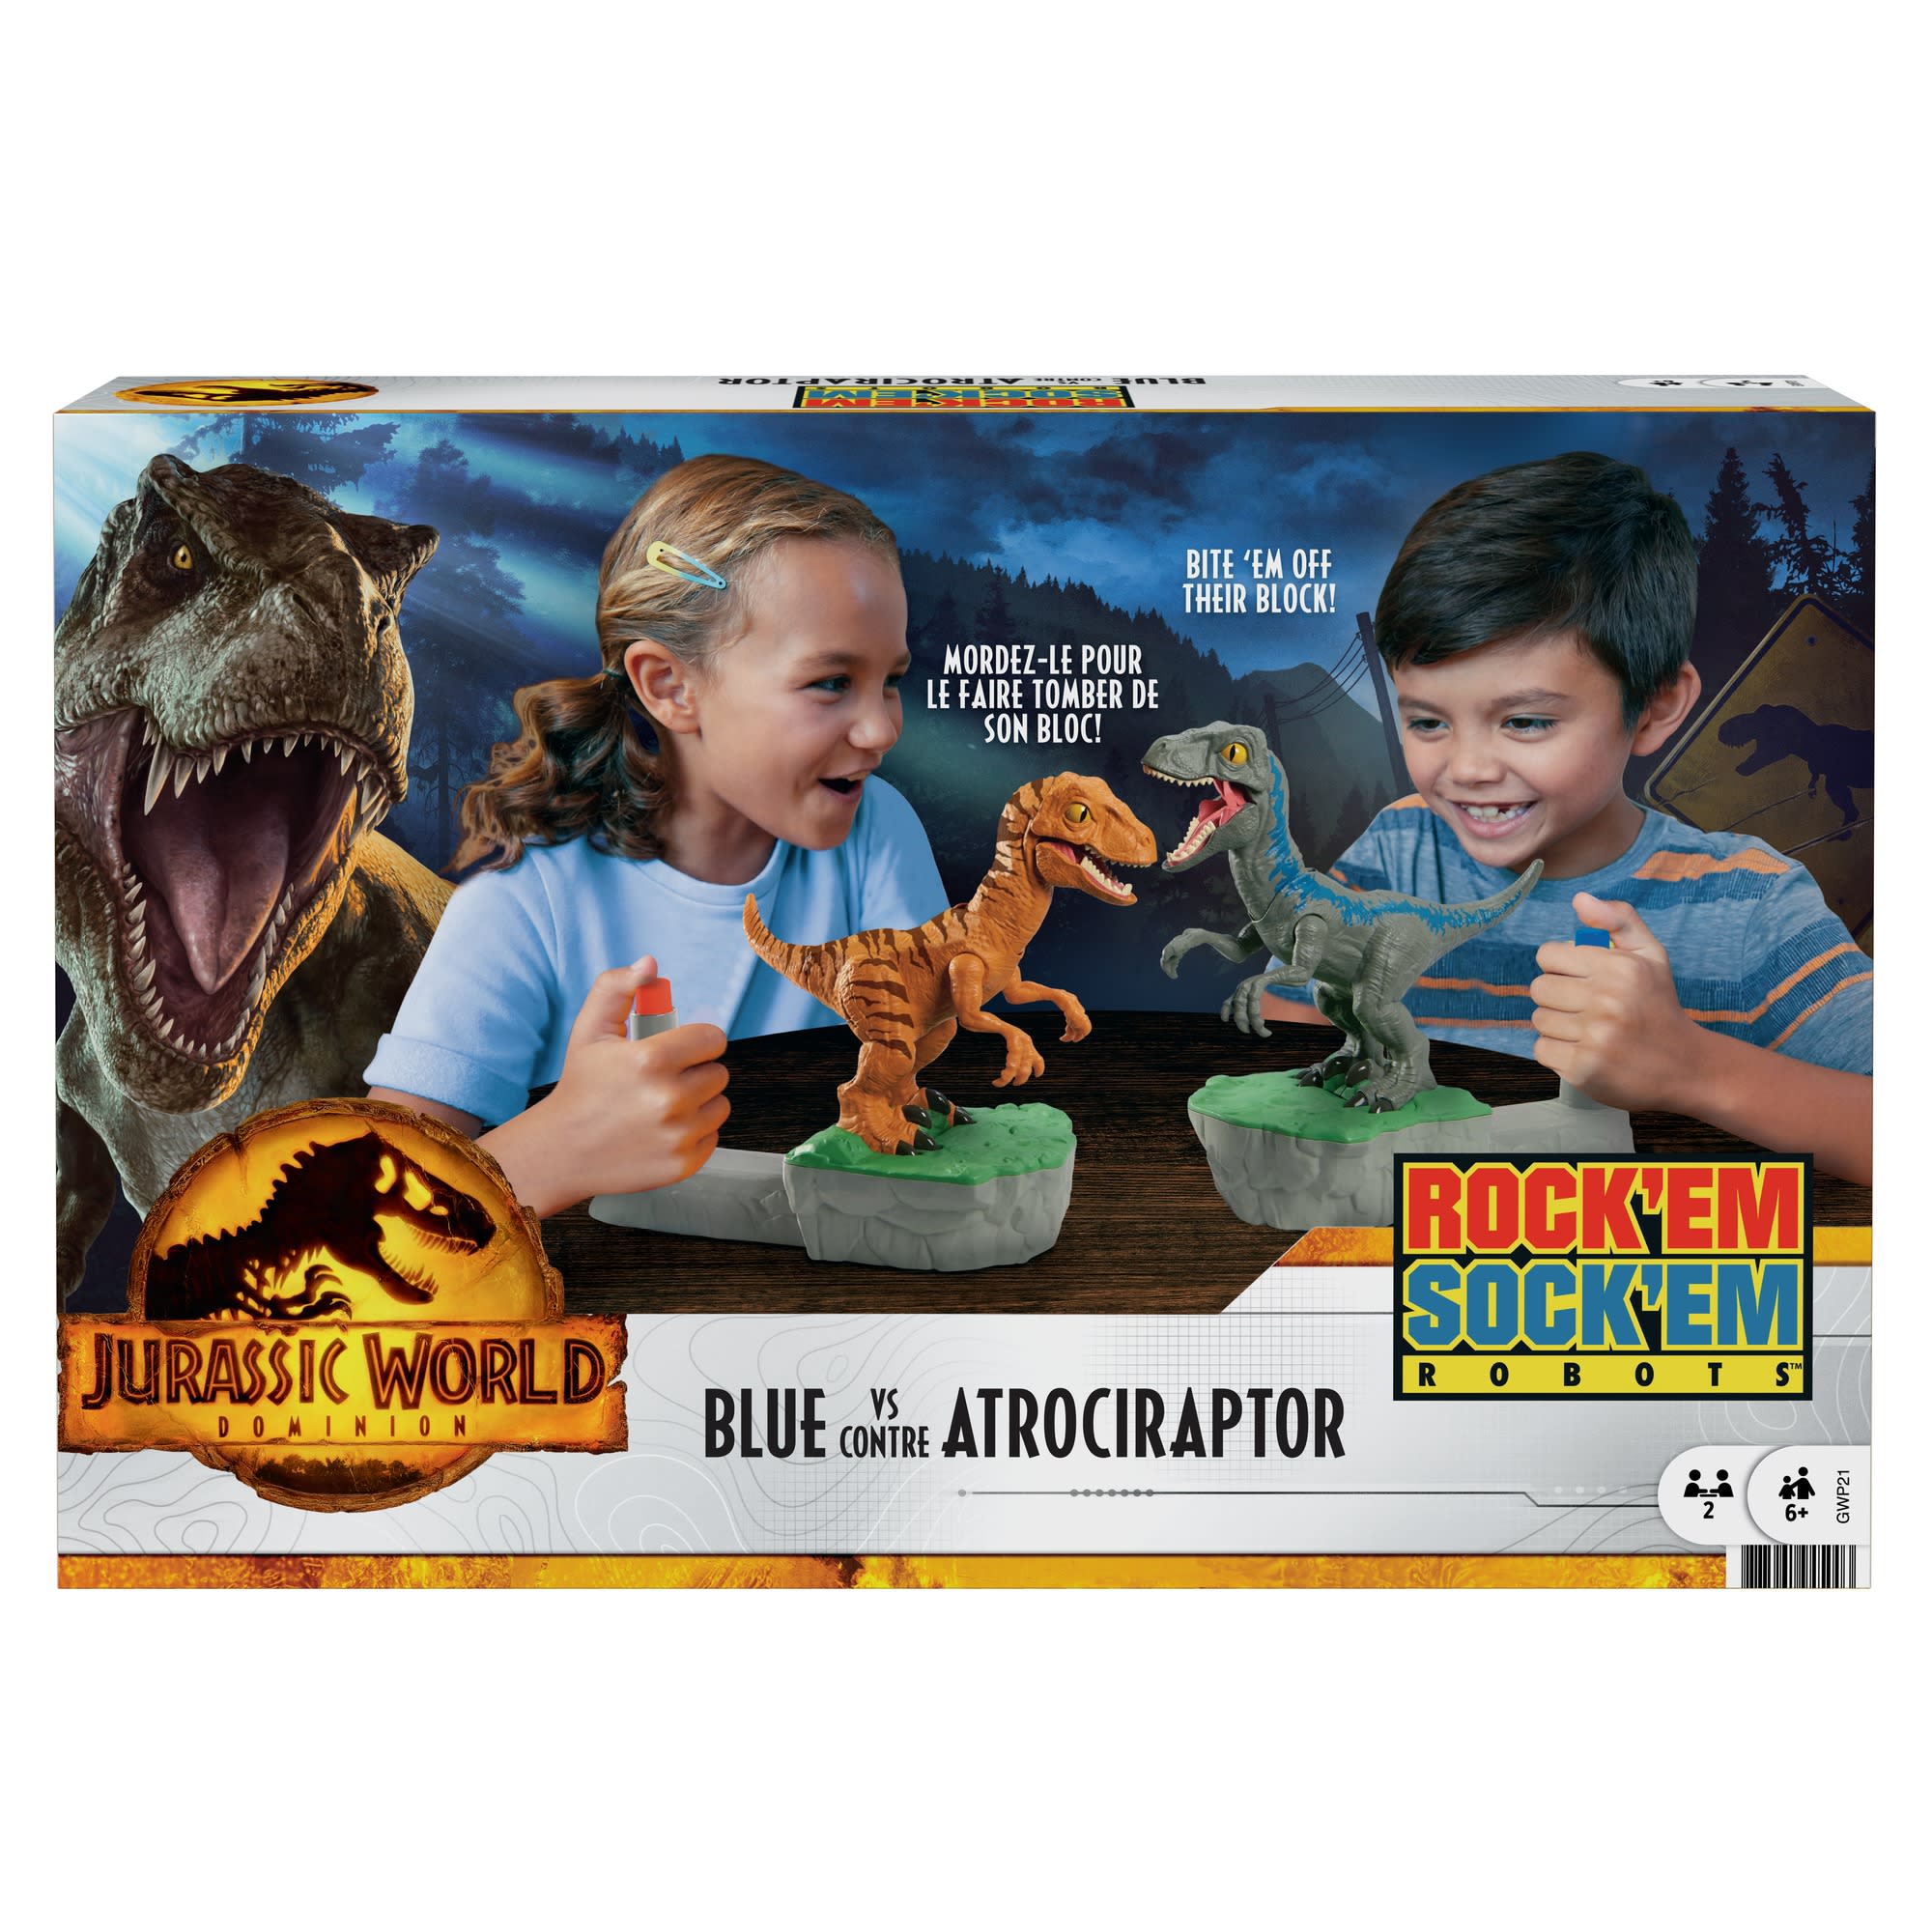 Rock 'Em Sock 'Em Robots Blue Vs Atrociraptor Jurassic World Dominion |  Mattel